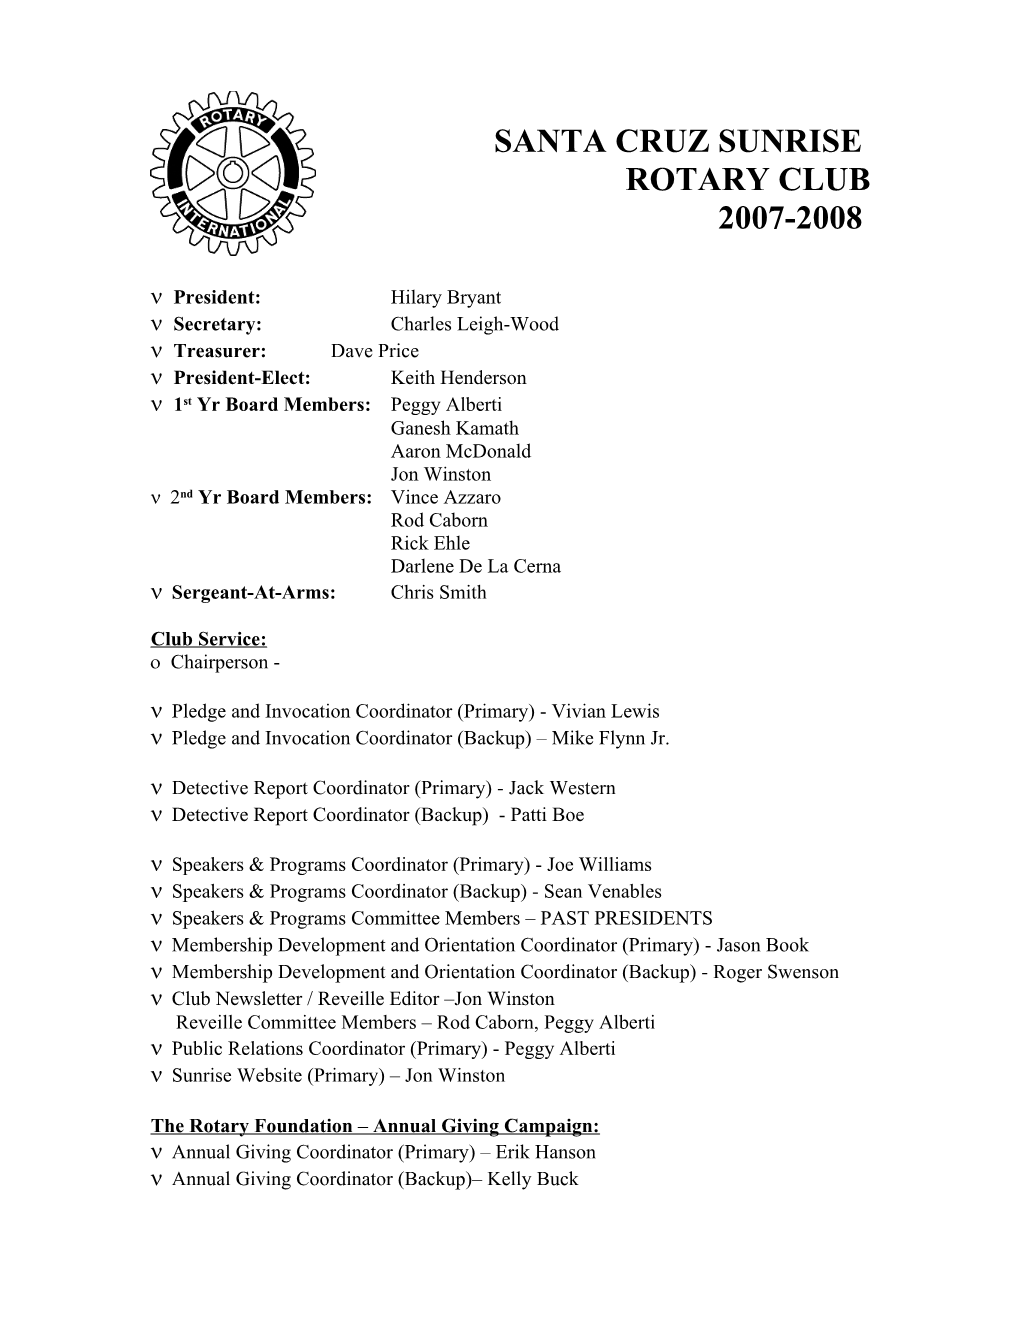 Committees - Santa Cruz Sunrise Rotary 2007-2008